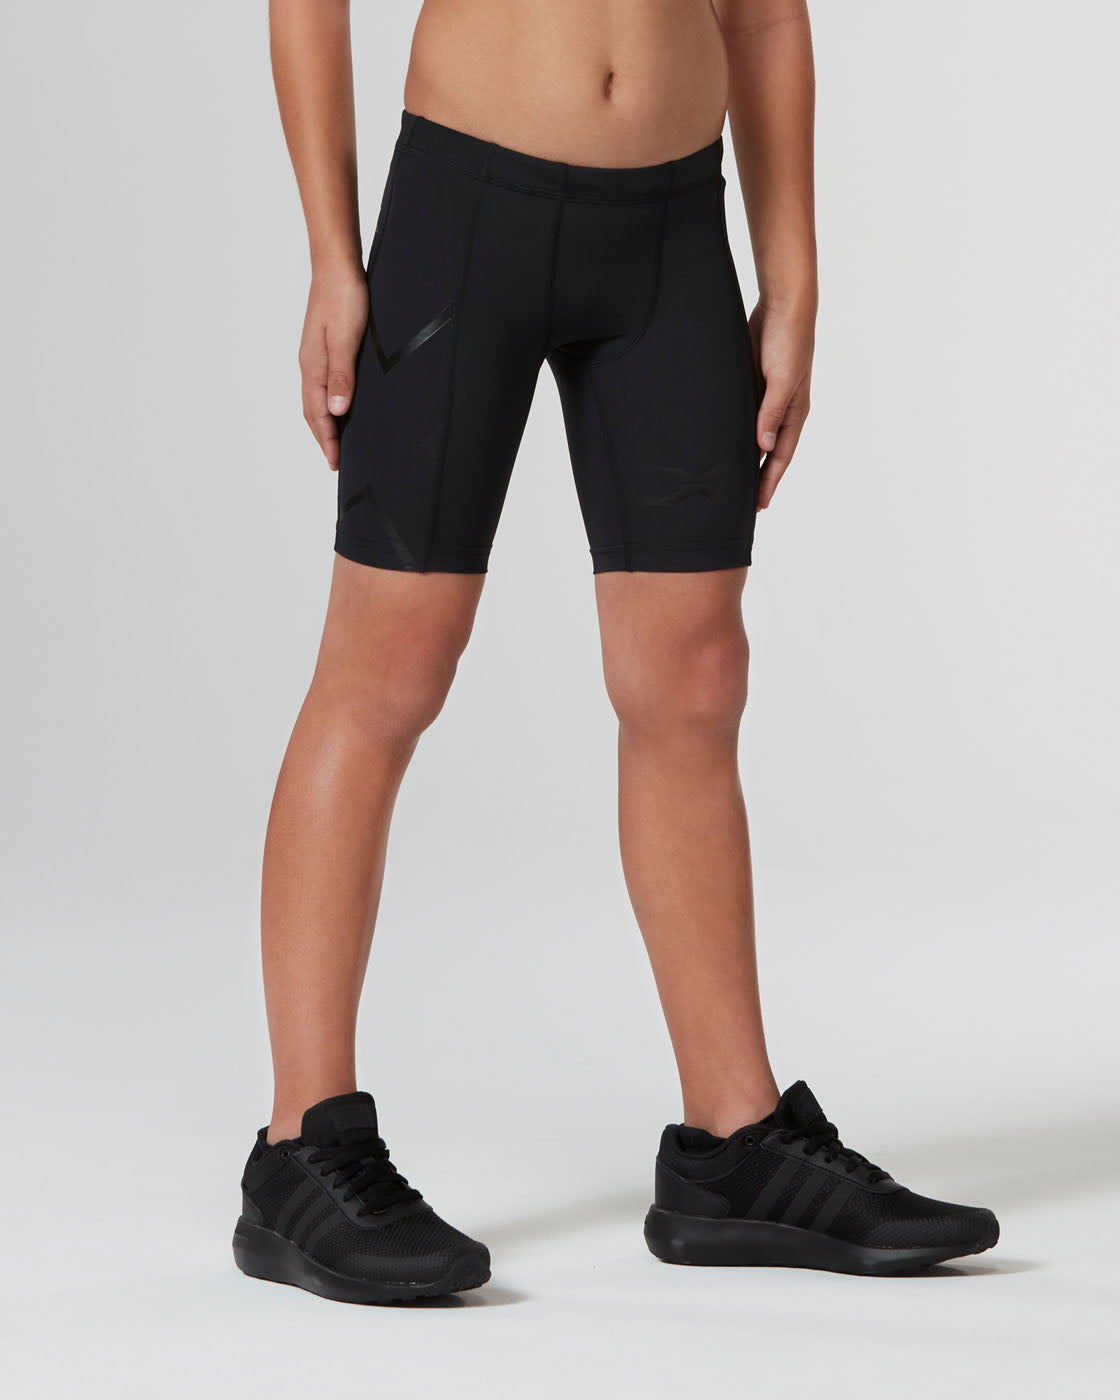 2XU Youth Compression Shorts - Black/Nero - Olympus Sports